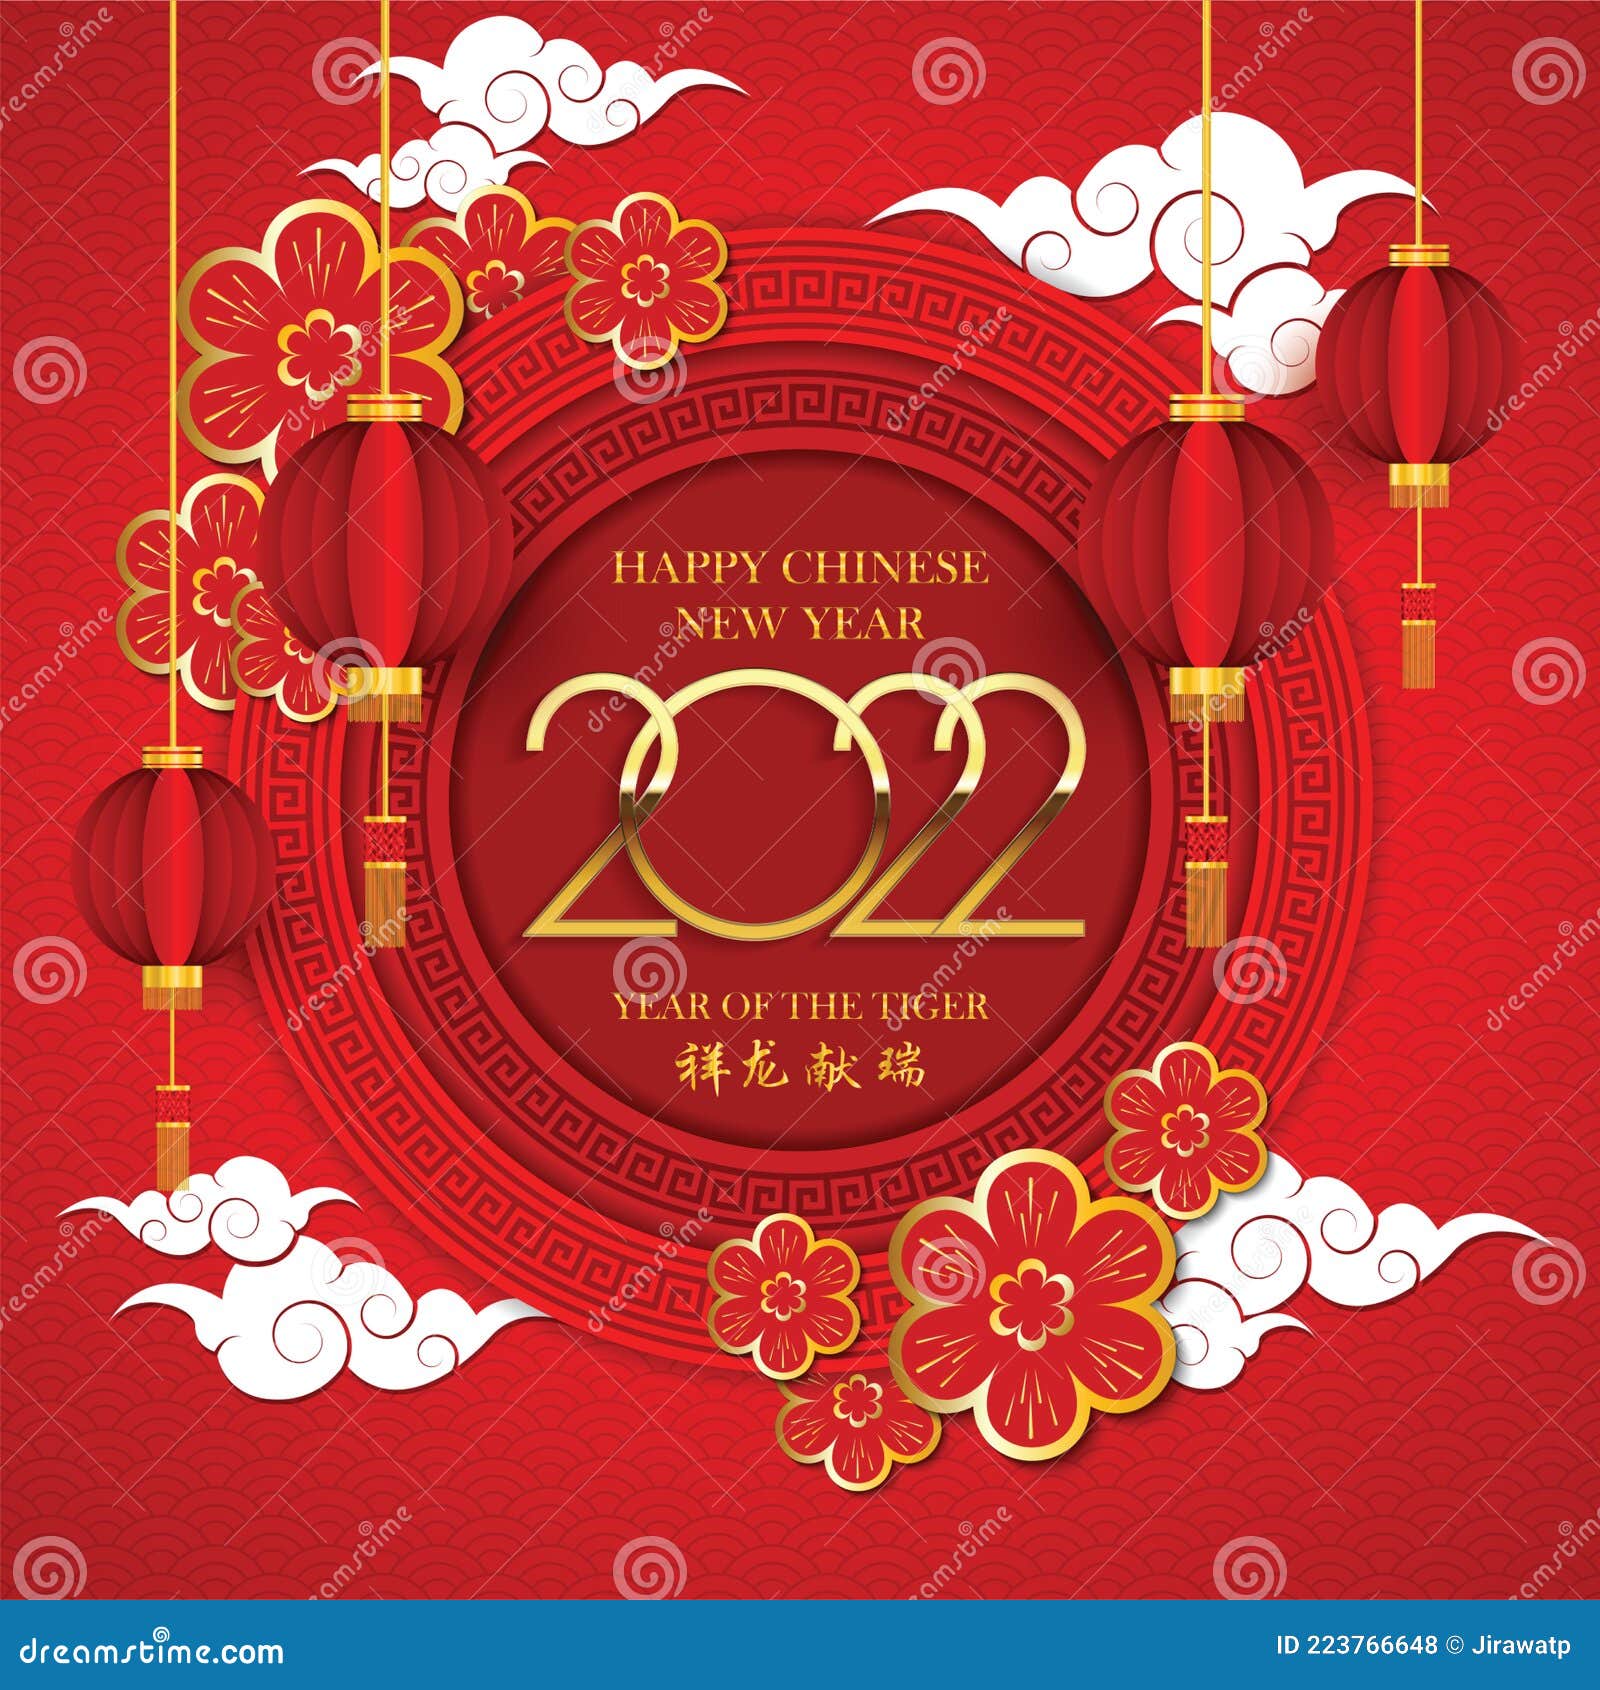 Chinese New Year 2022 Regular Holiday